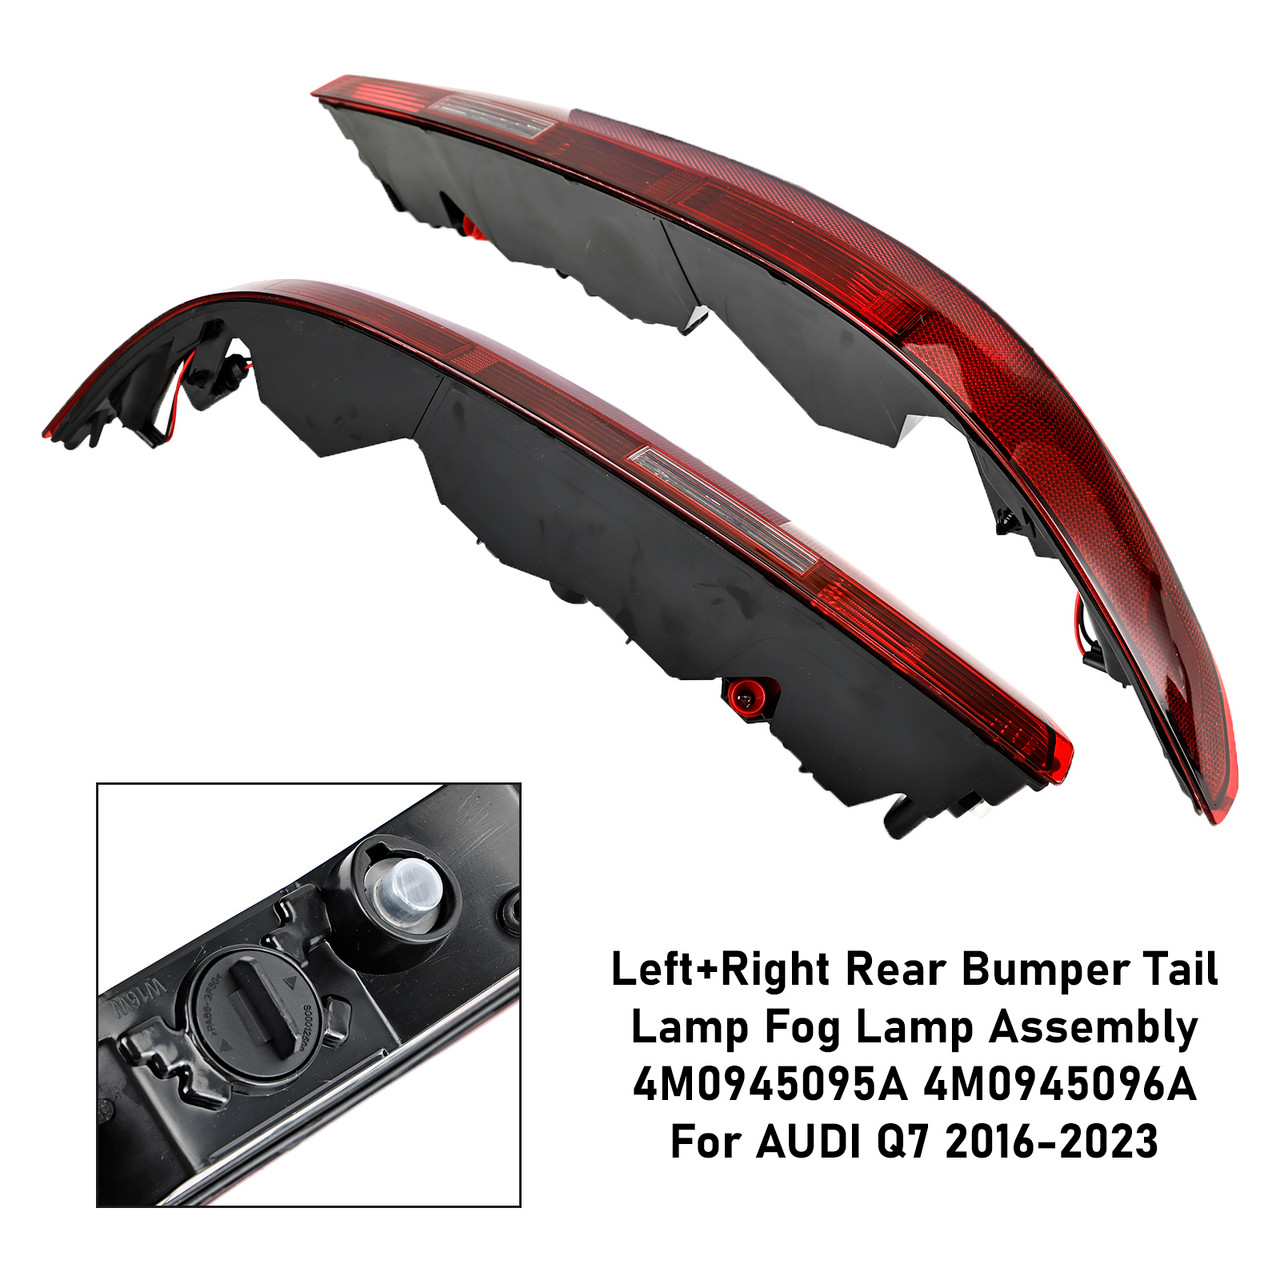 L+R Rear Bumper Tail Lamp Fog Lamp Assembly 4M0945095A 96A For AUDI Q7 2016-2023